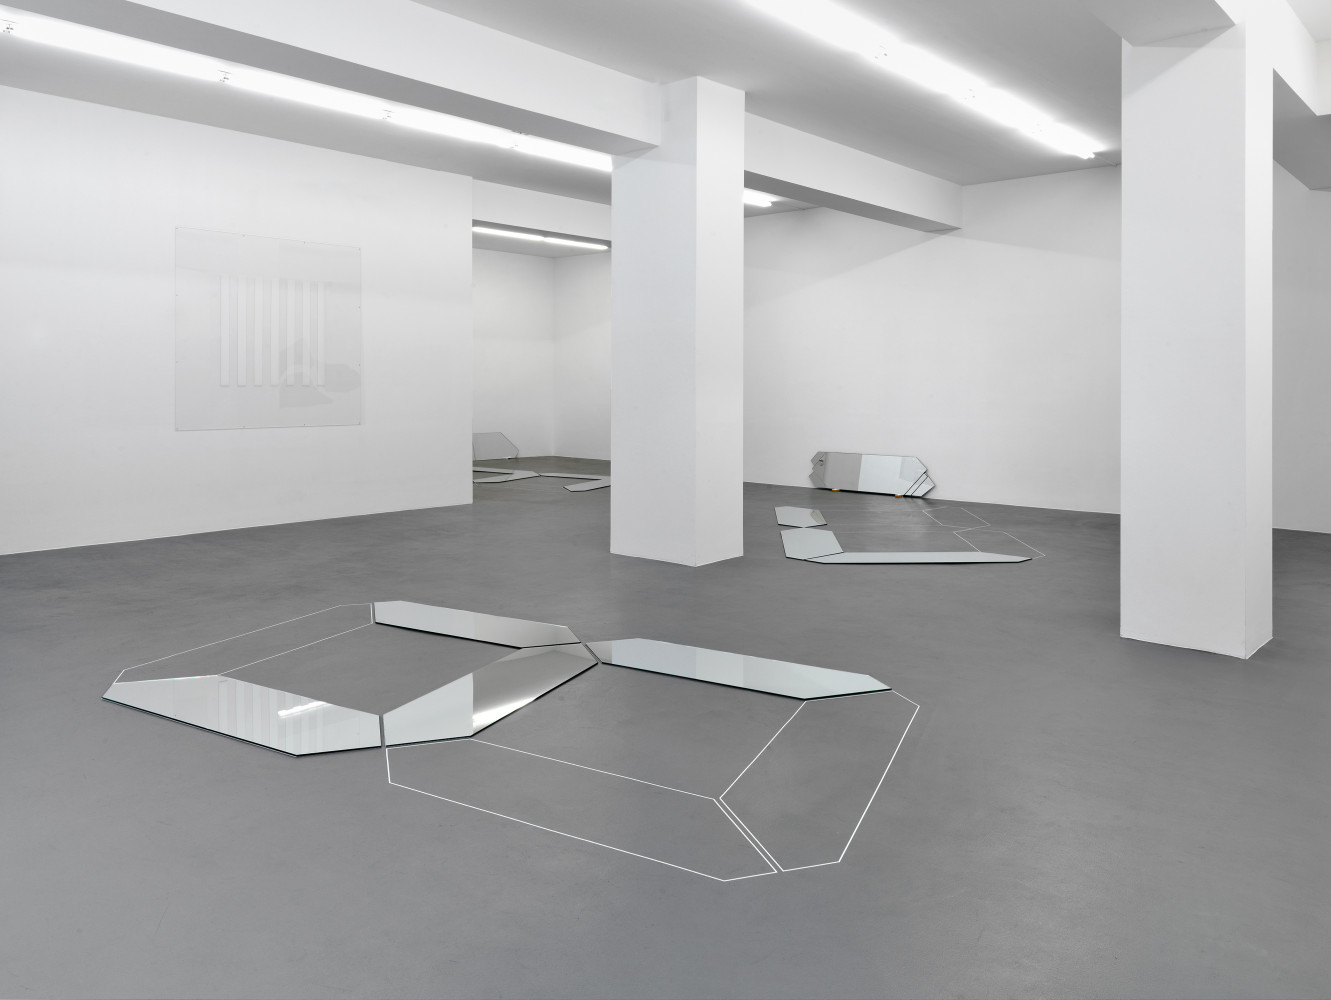 ‘Daniel Buren, Tony Cragg, Tatsuo Miyajima’, Installationsansicht, Buchmann Galerie, 2012